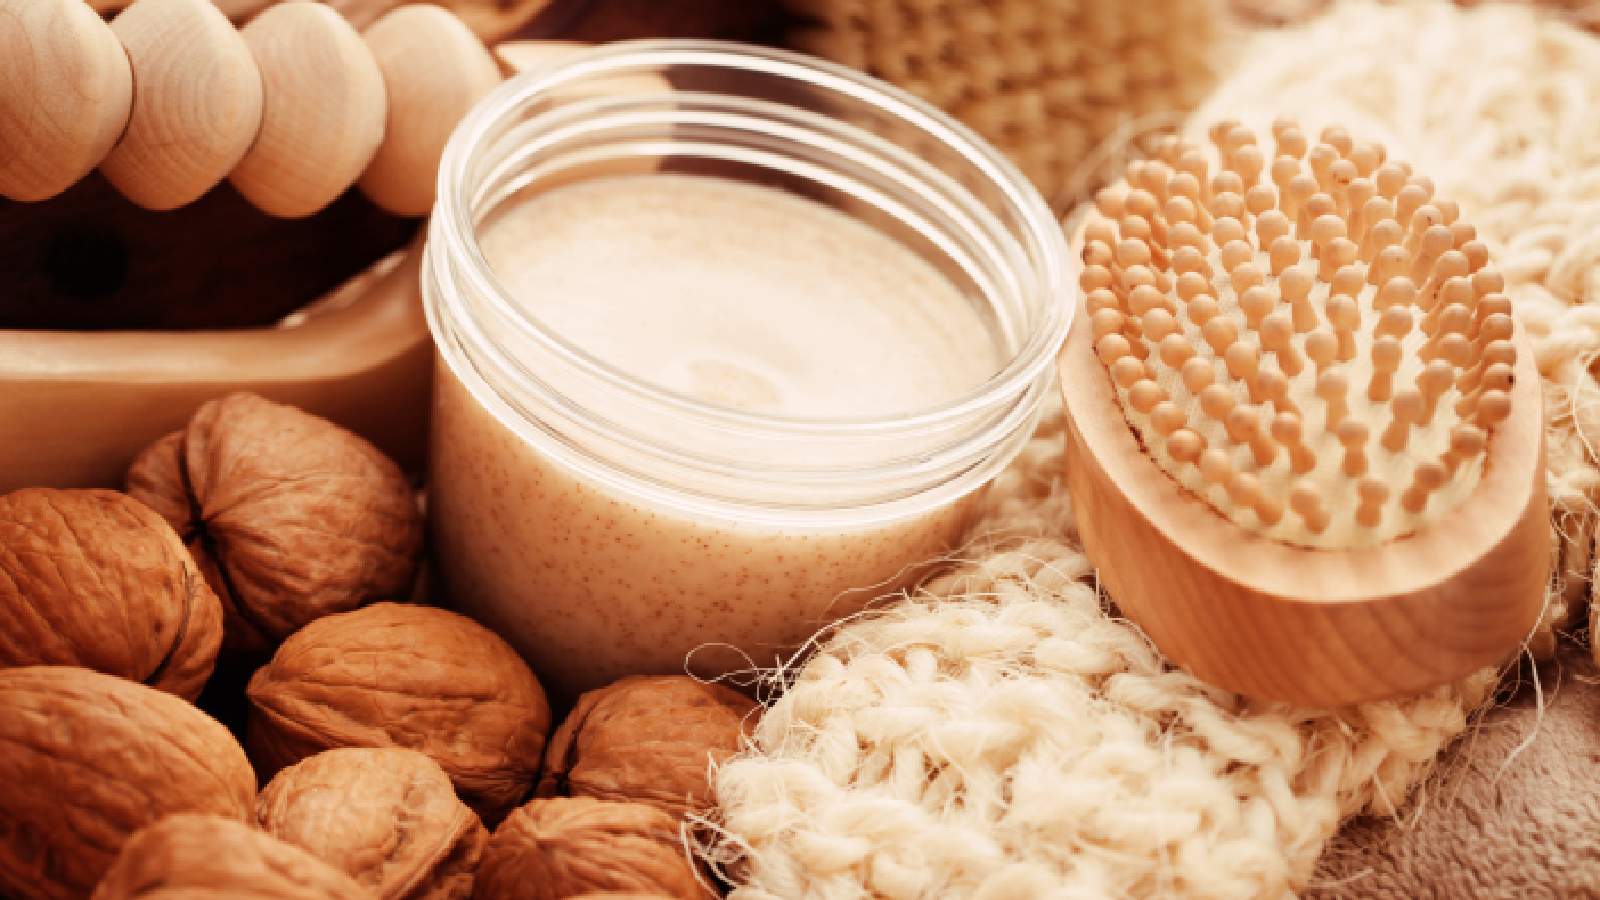 6 best walnut scrubs for skin to remove dead skin cells